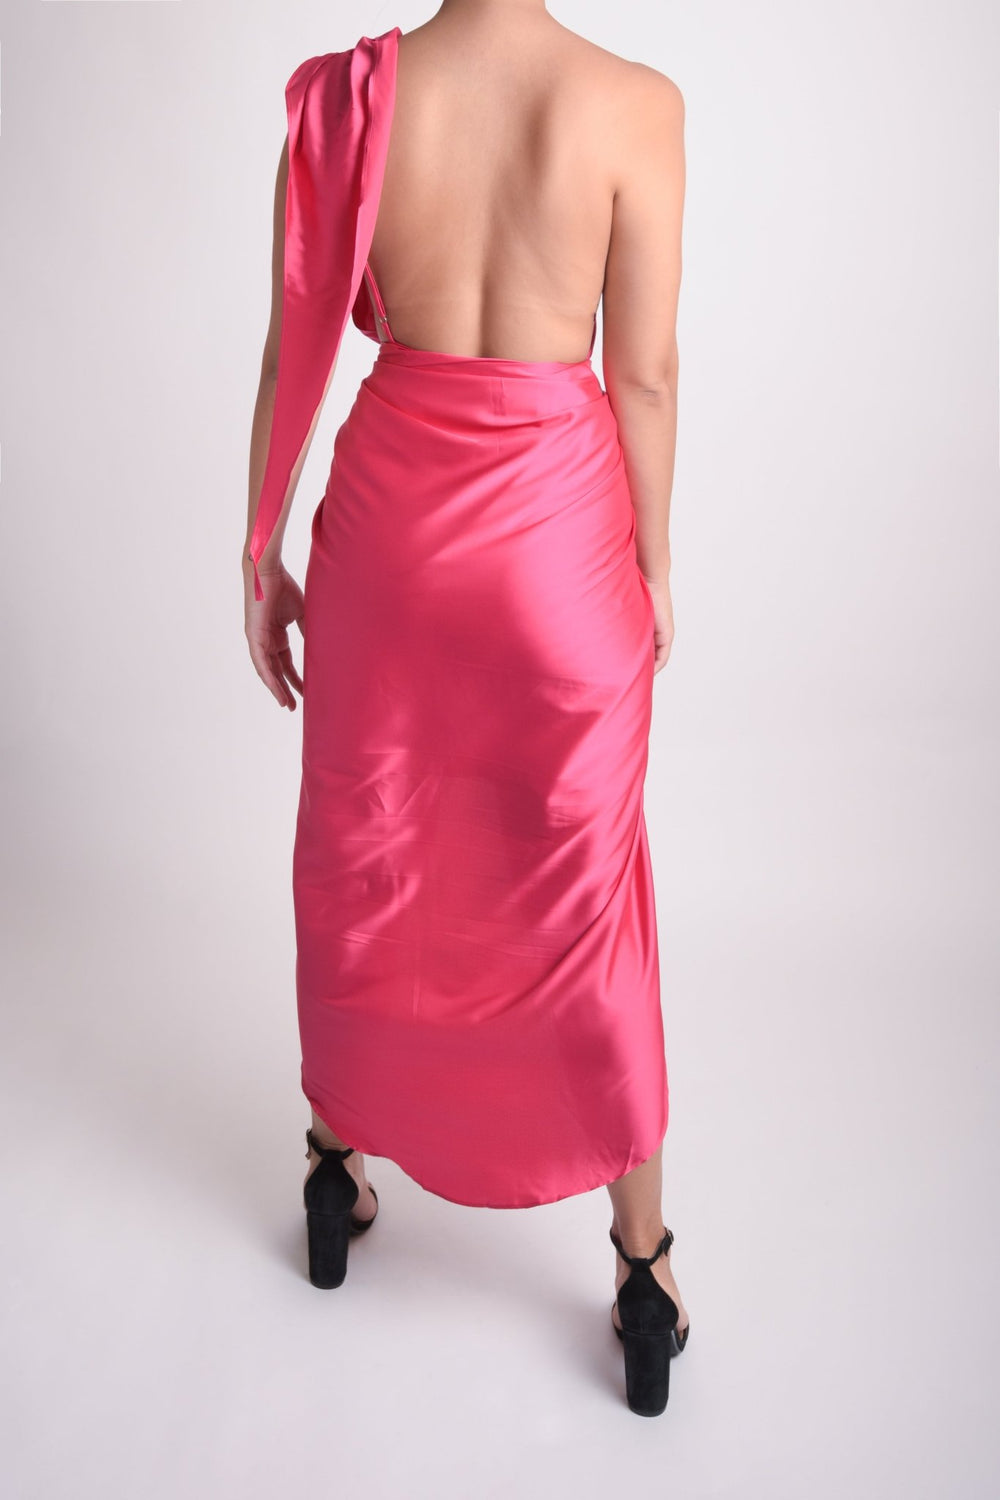 Celine - rosa - Lend the Trend renta de vestidos mexico